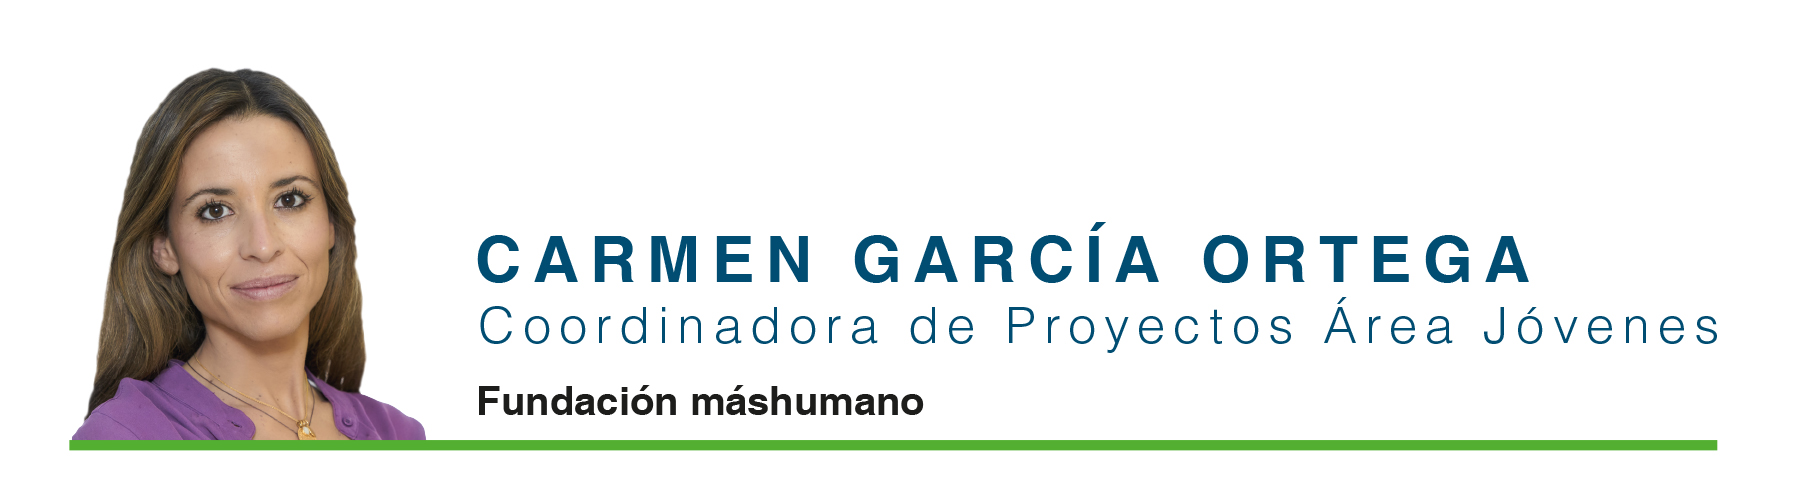 firma CARMEN GARCÍA ORTEGA